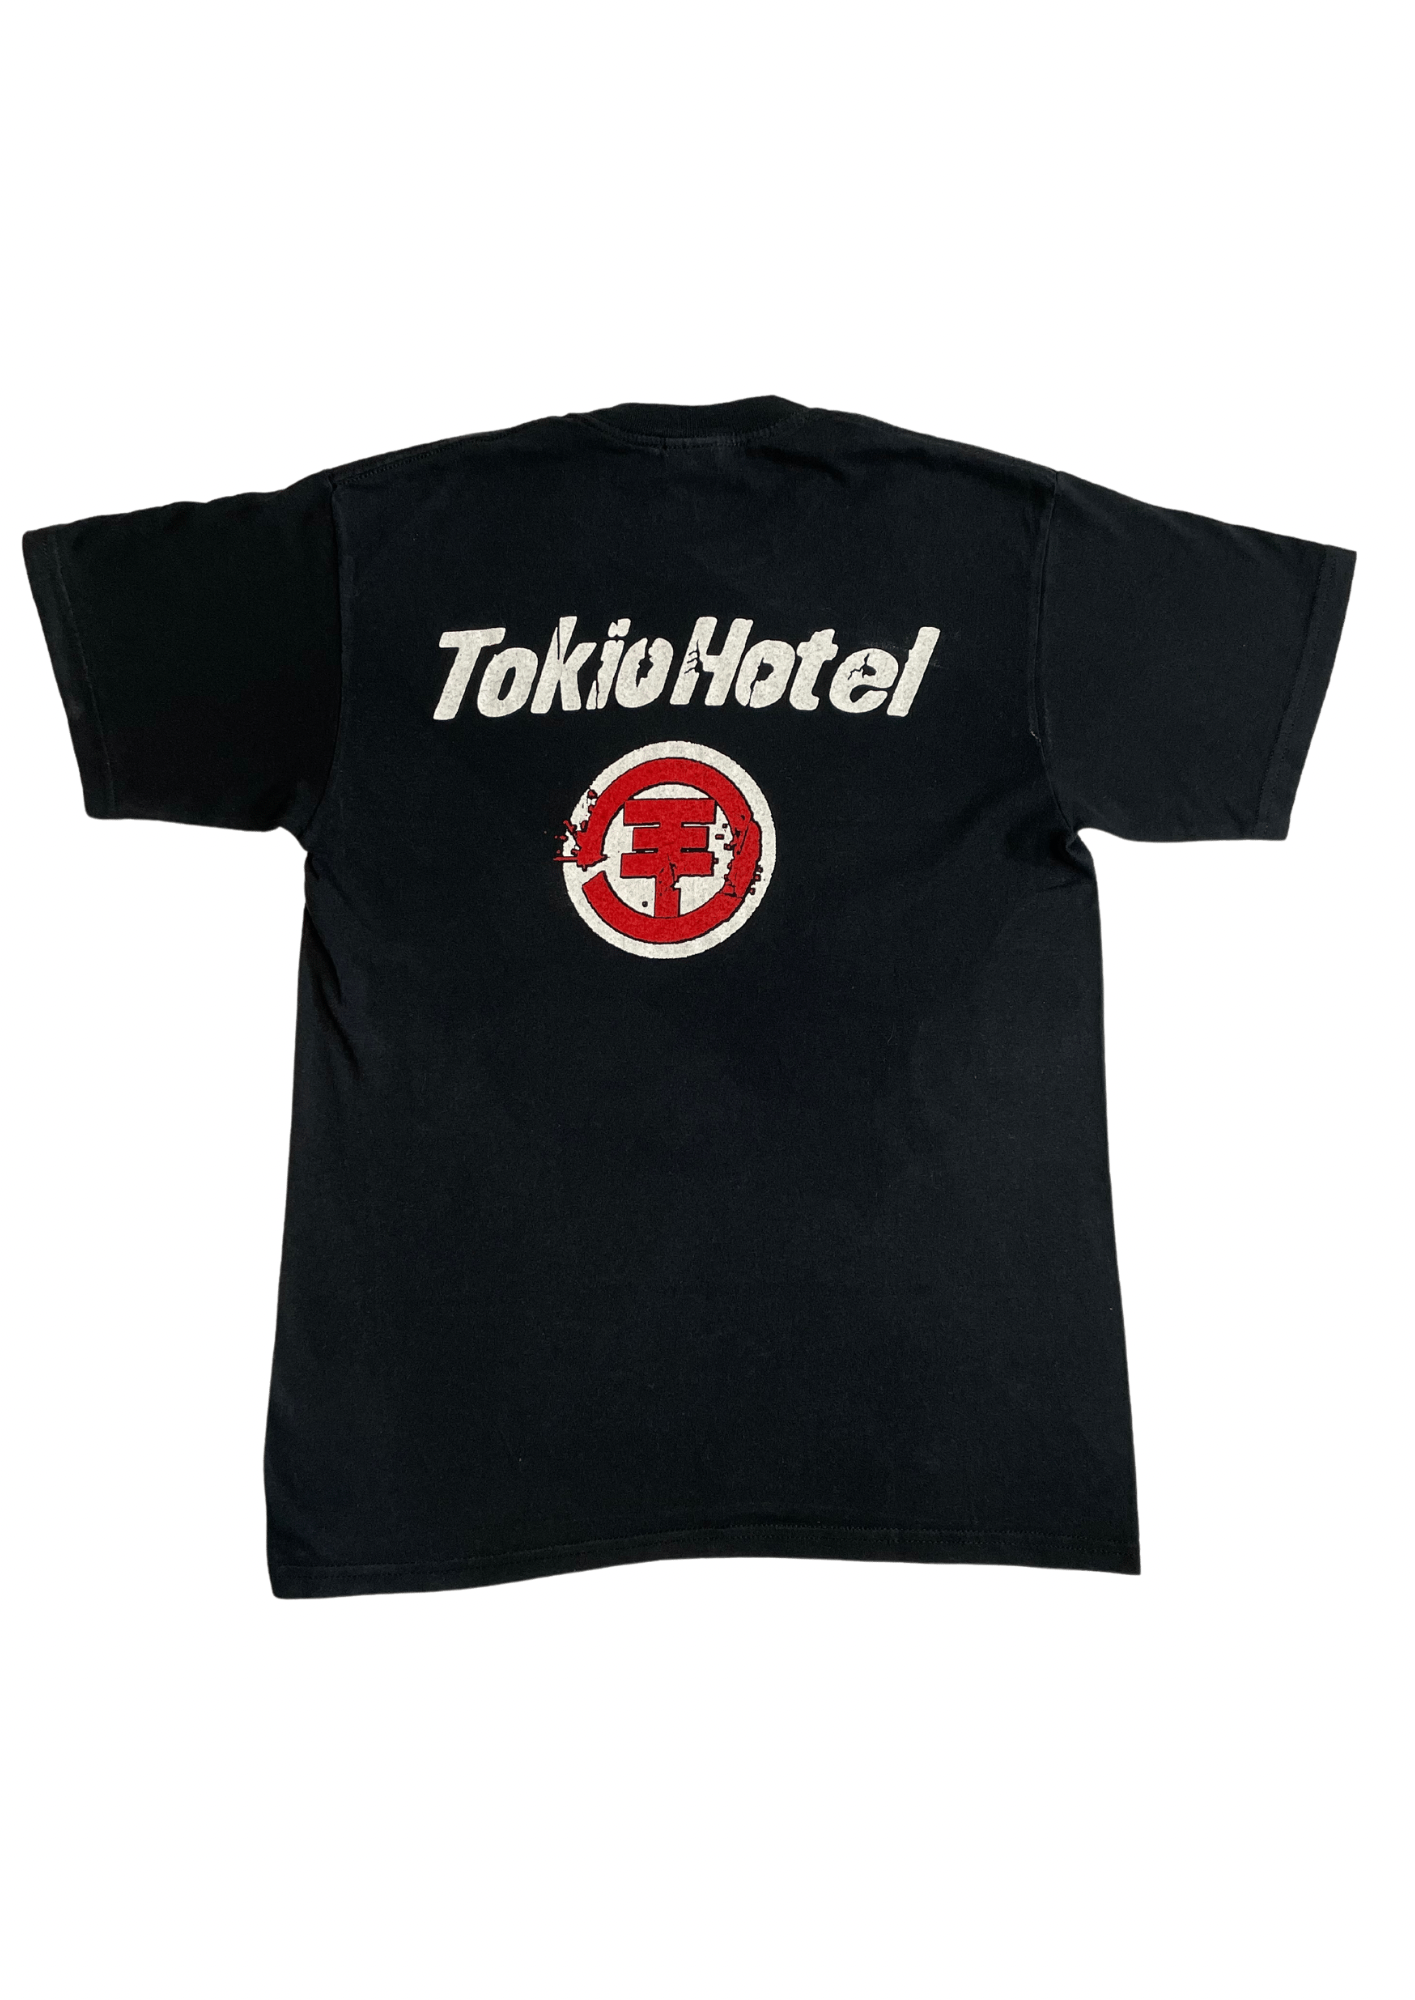 T-shirt Tokyo Hotel 3